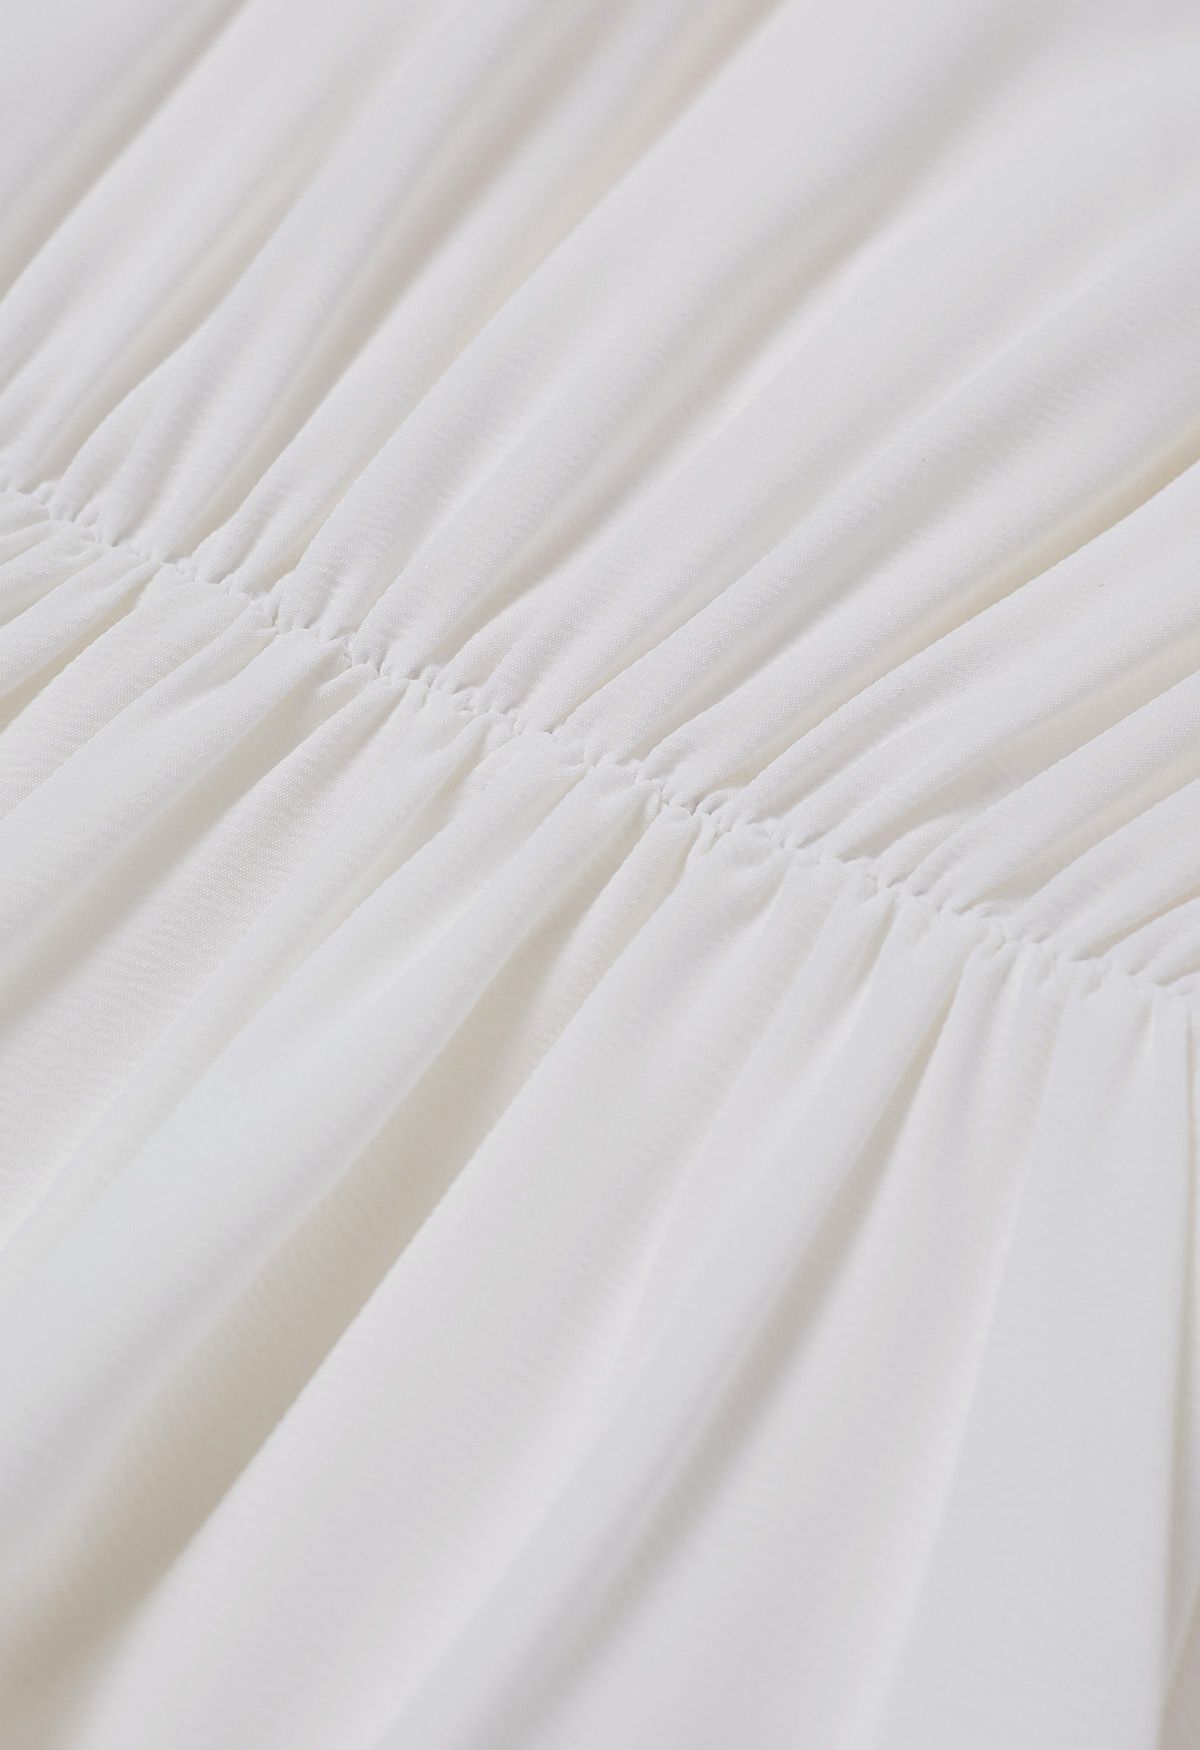 Lace Tiered Wrap Chiffon Midi Dress in White